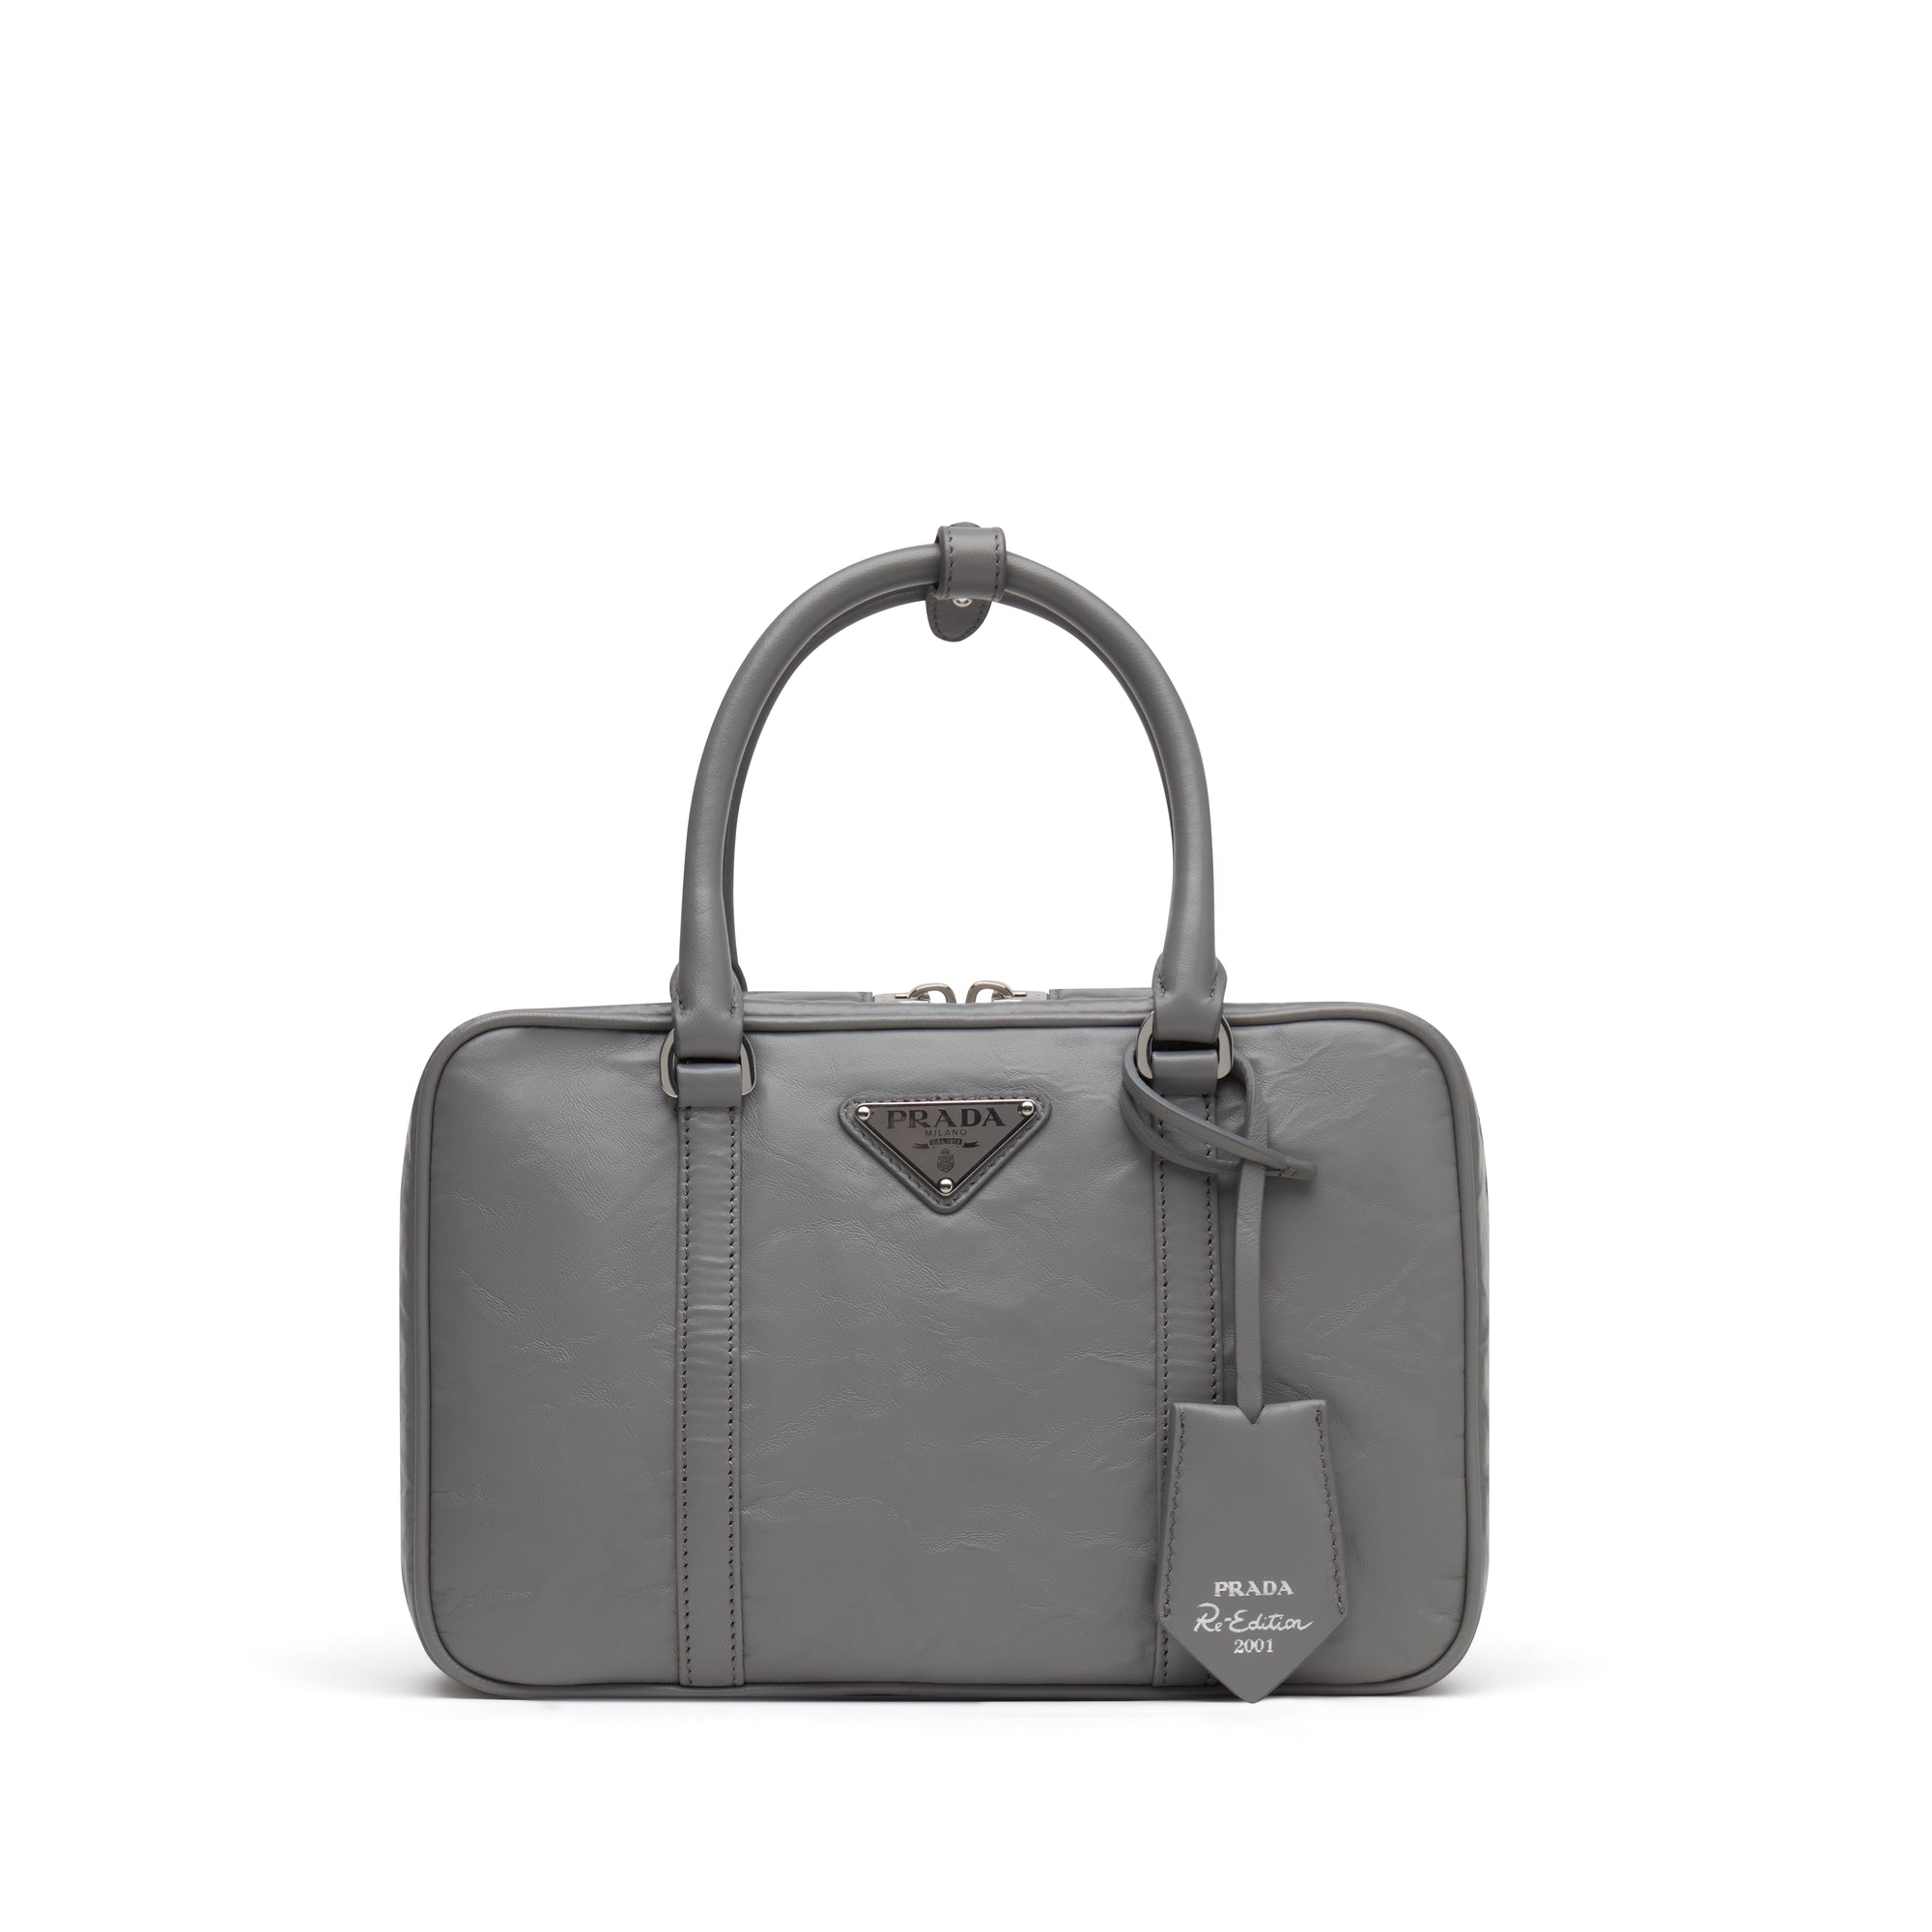 Prada - Women’s Medium Top Handle Handbag - (Slate Grey) view 1